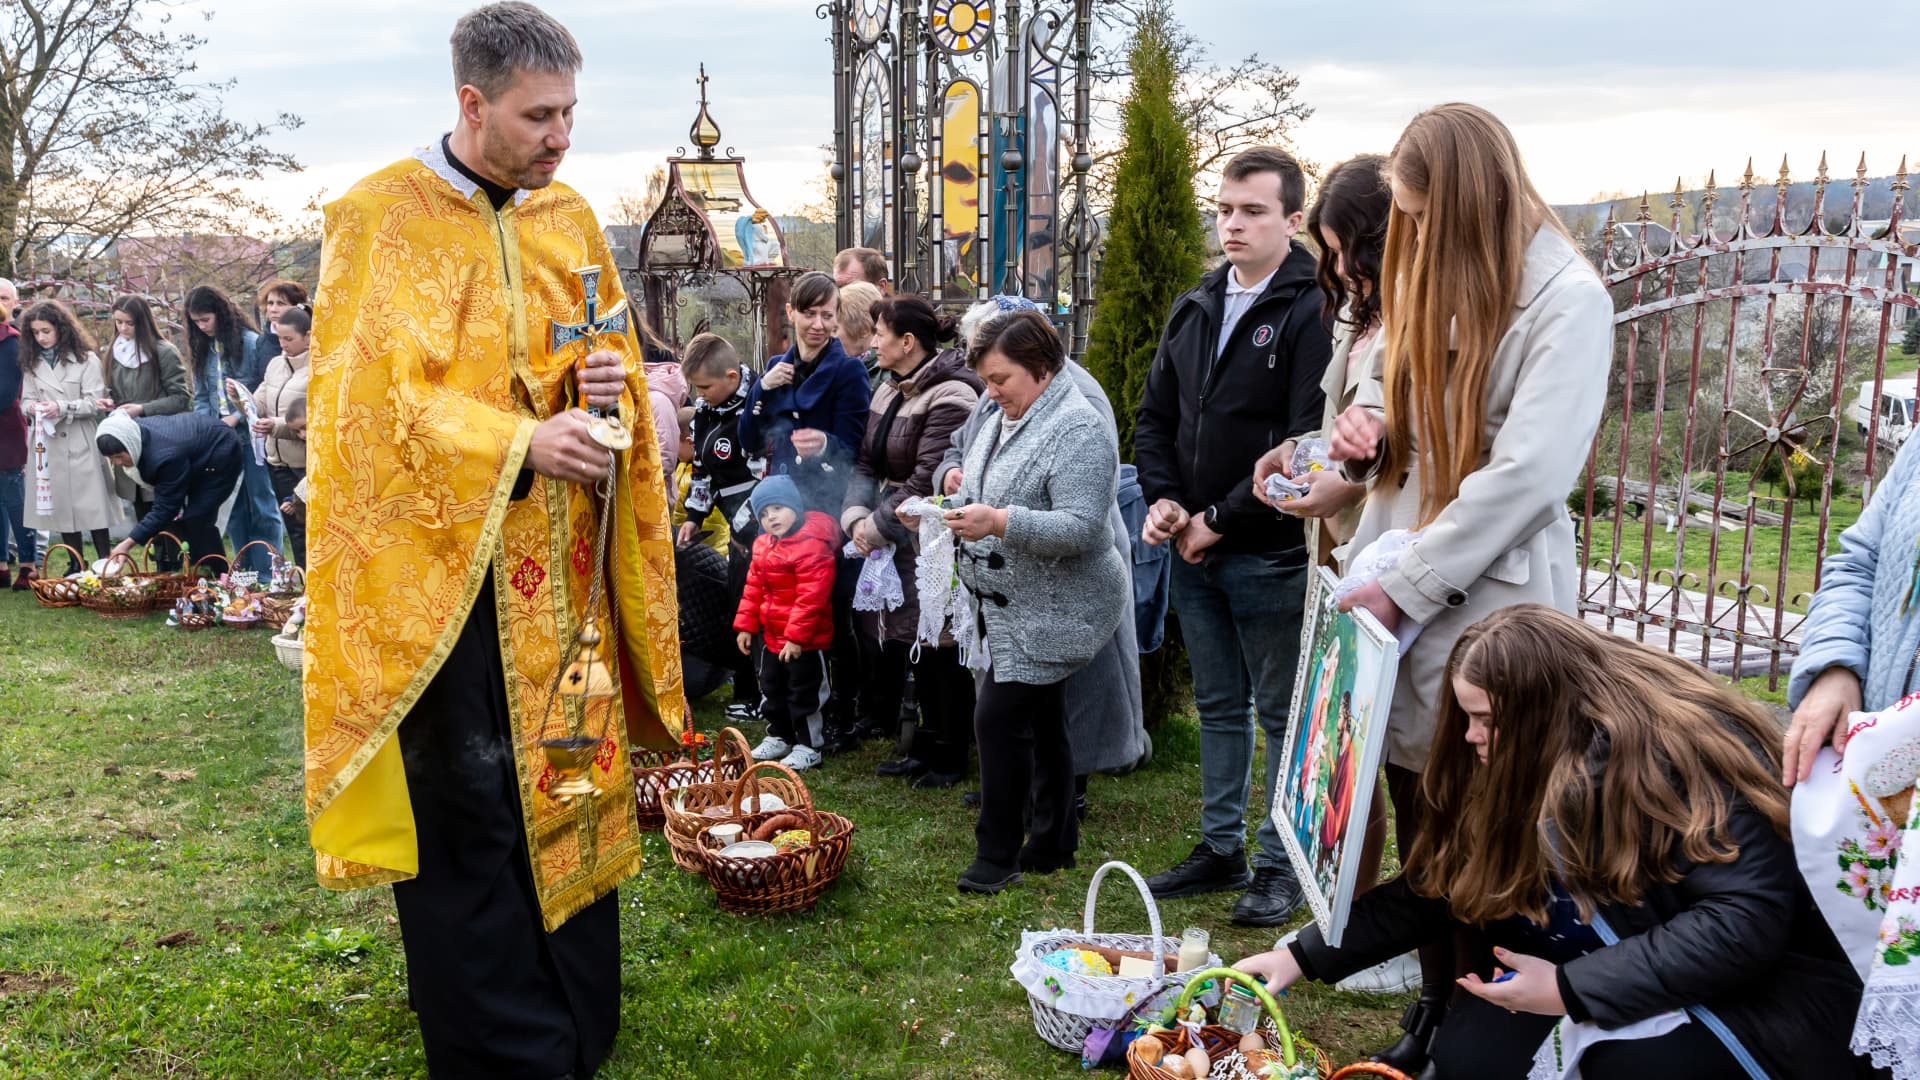 Dozens of Ukrainians attending the Holy Saturday traditional food basket blessing ceremony in Greek-Catholic church in Nadyby, Lviv Oblast, Ukraine on April 23, 2022.